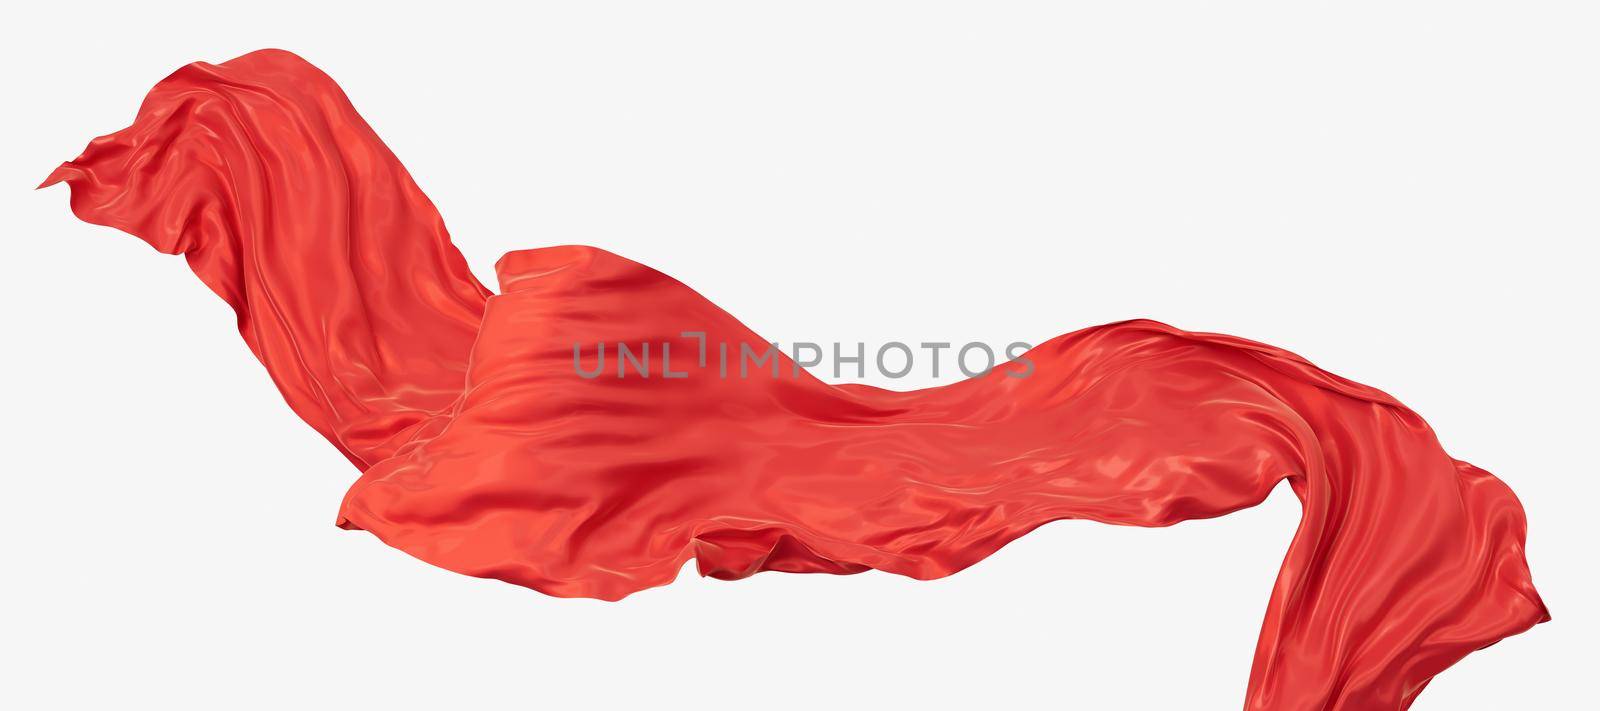 Flowing red wave cloth, 3d rendering. by vinkfan